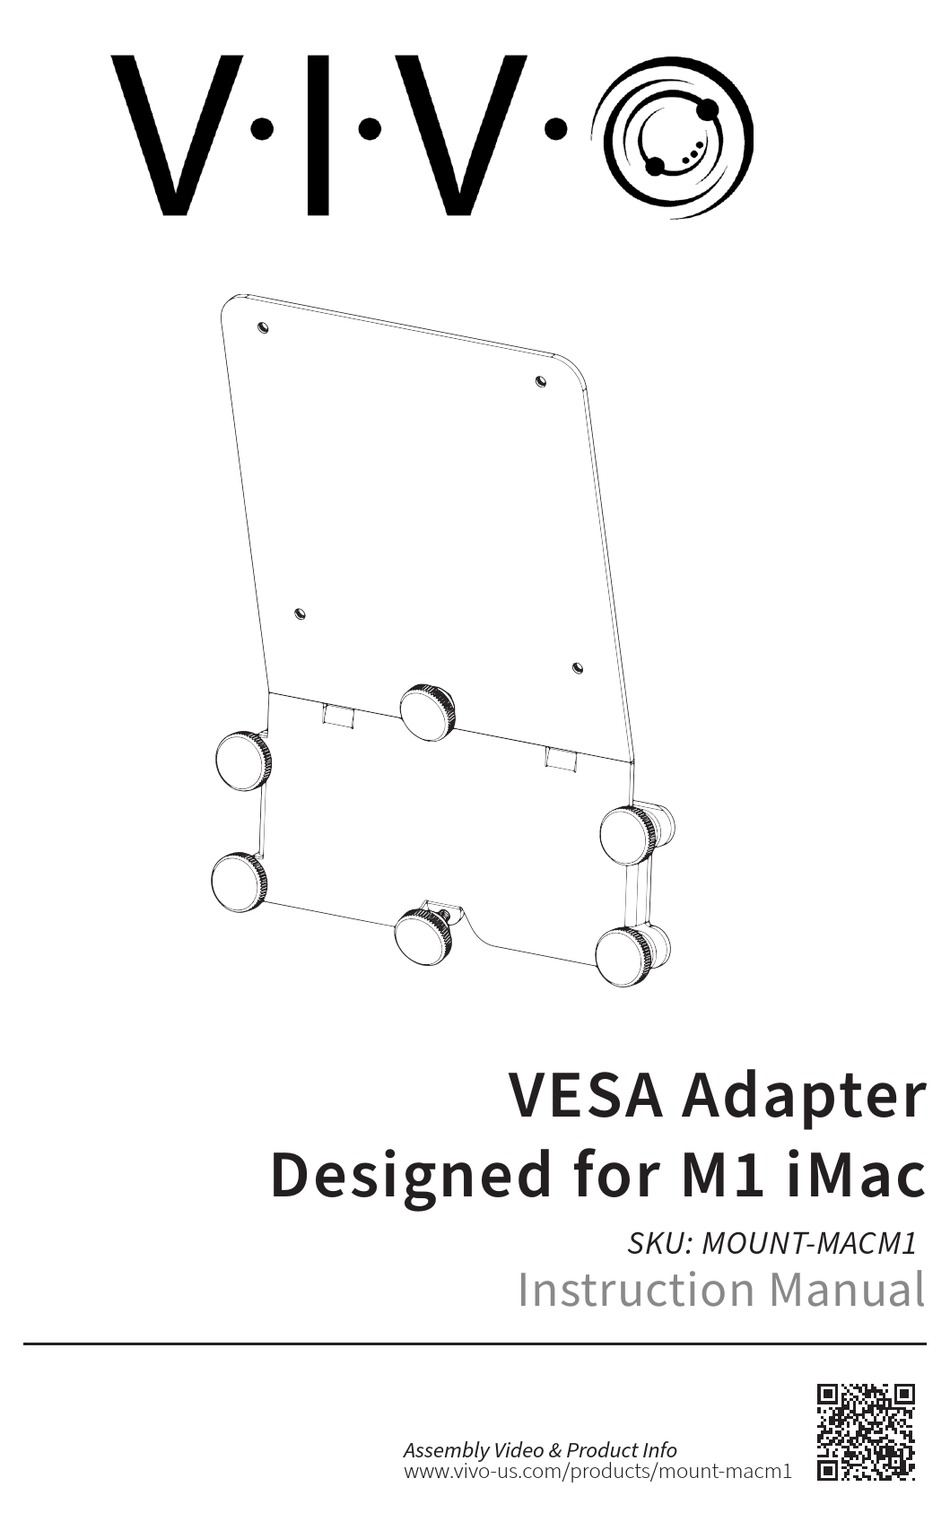 VIvo VESA Adapter for M1 iMac